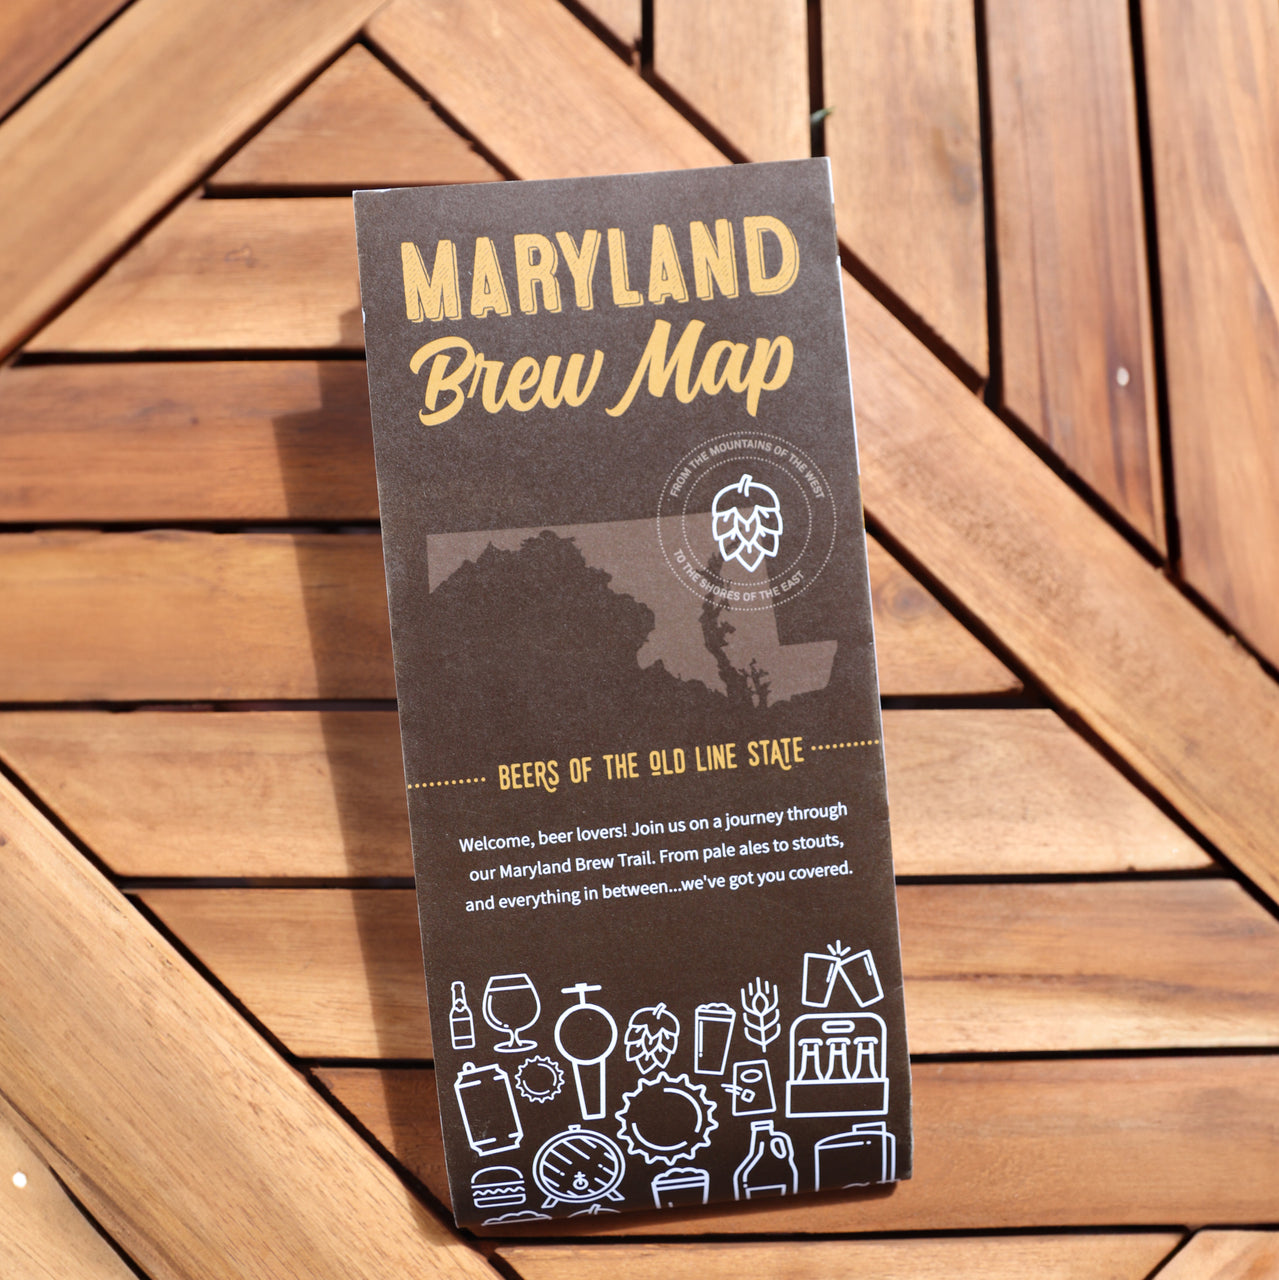 Maryland Brew Map